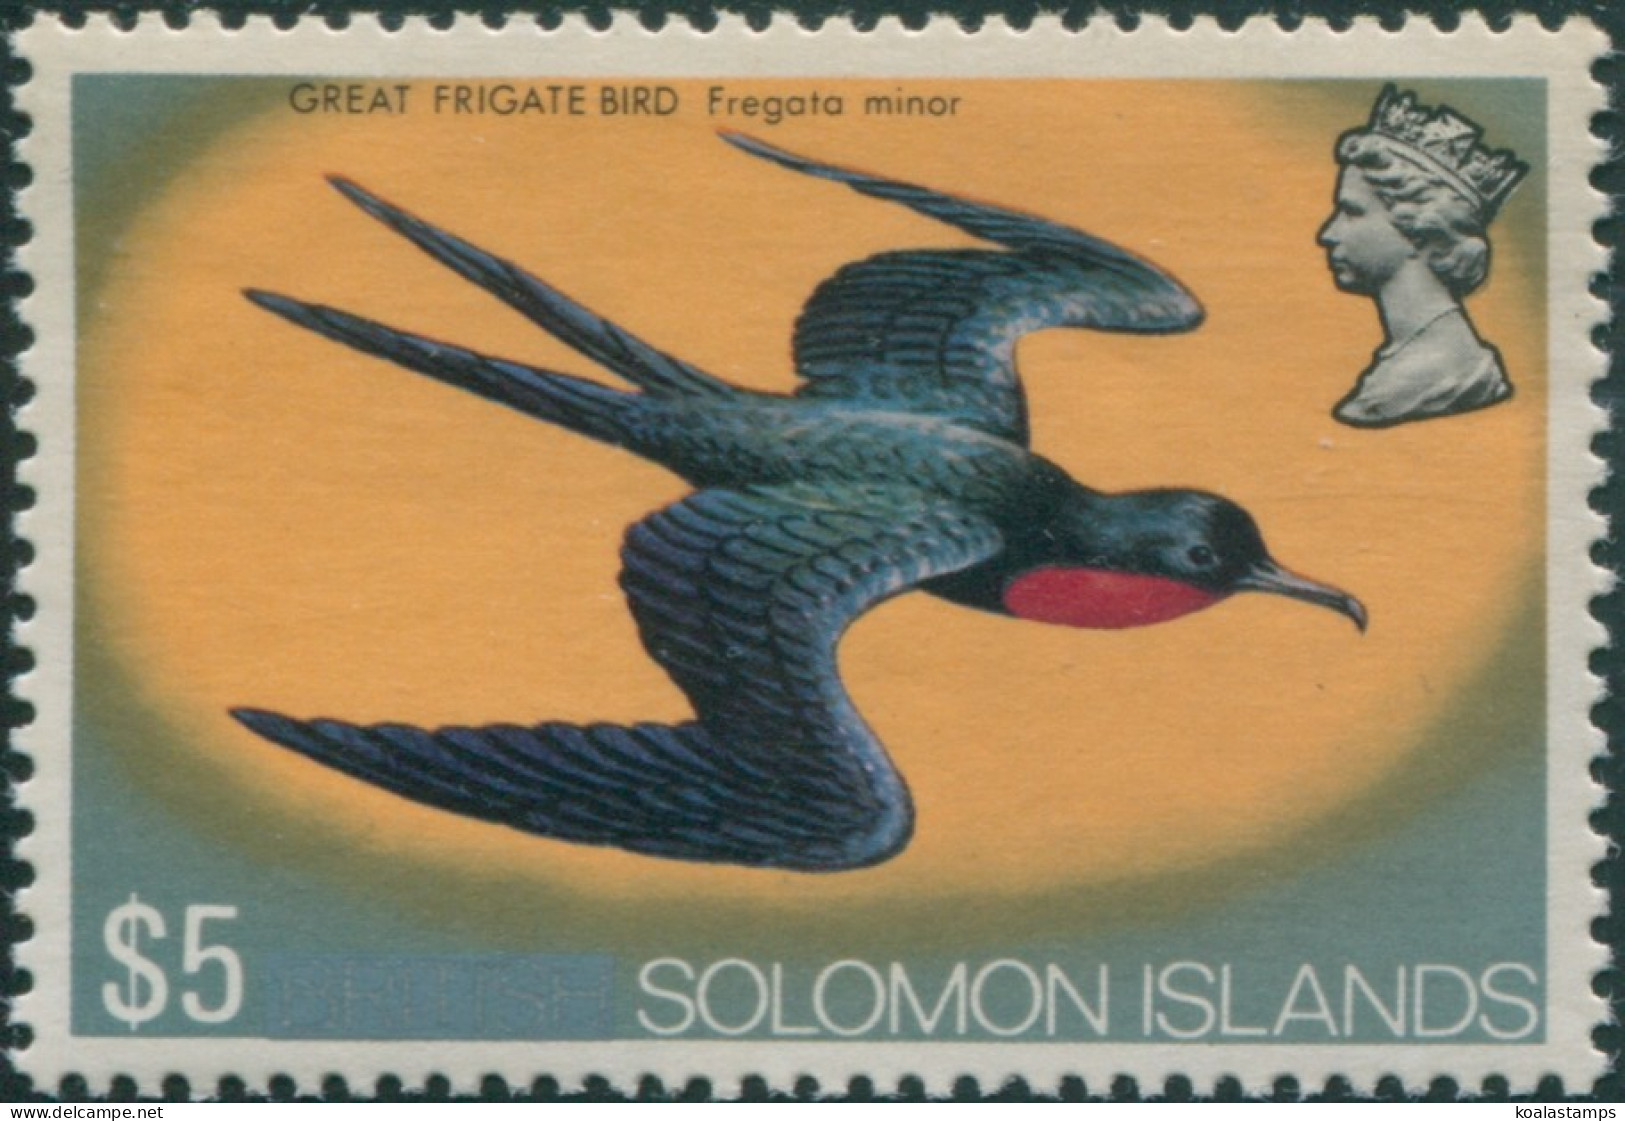 Solomon Islands 1975 SG300 $5 Great Frigate Bird MLH - Solomoneilanden (1978-...)